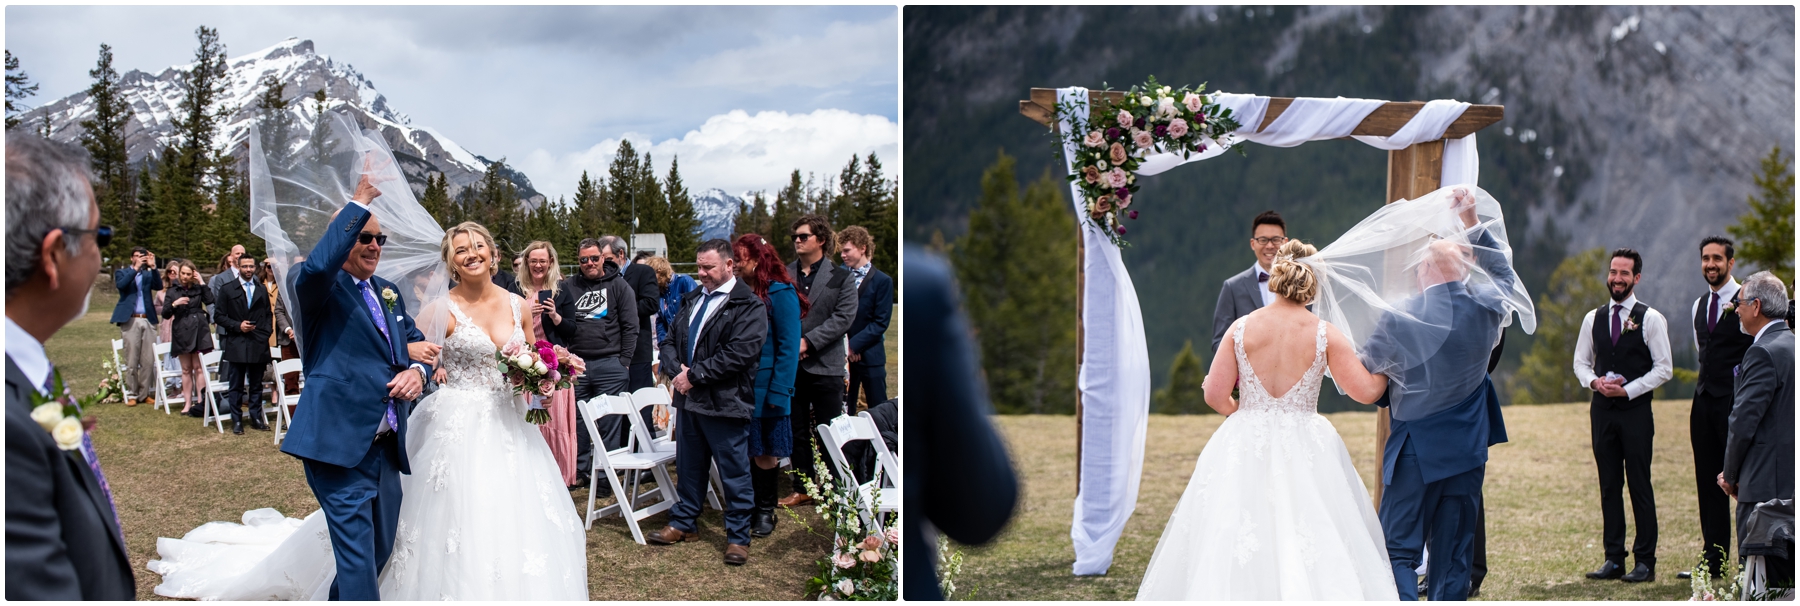 Outdoor Banff Wedding Ceremony Location